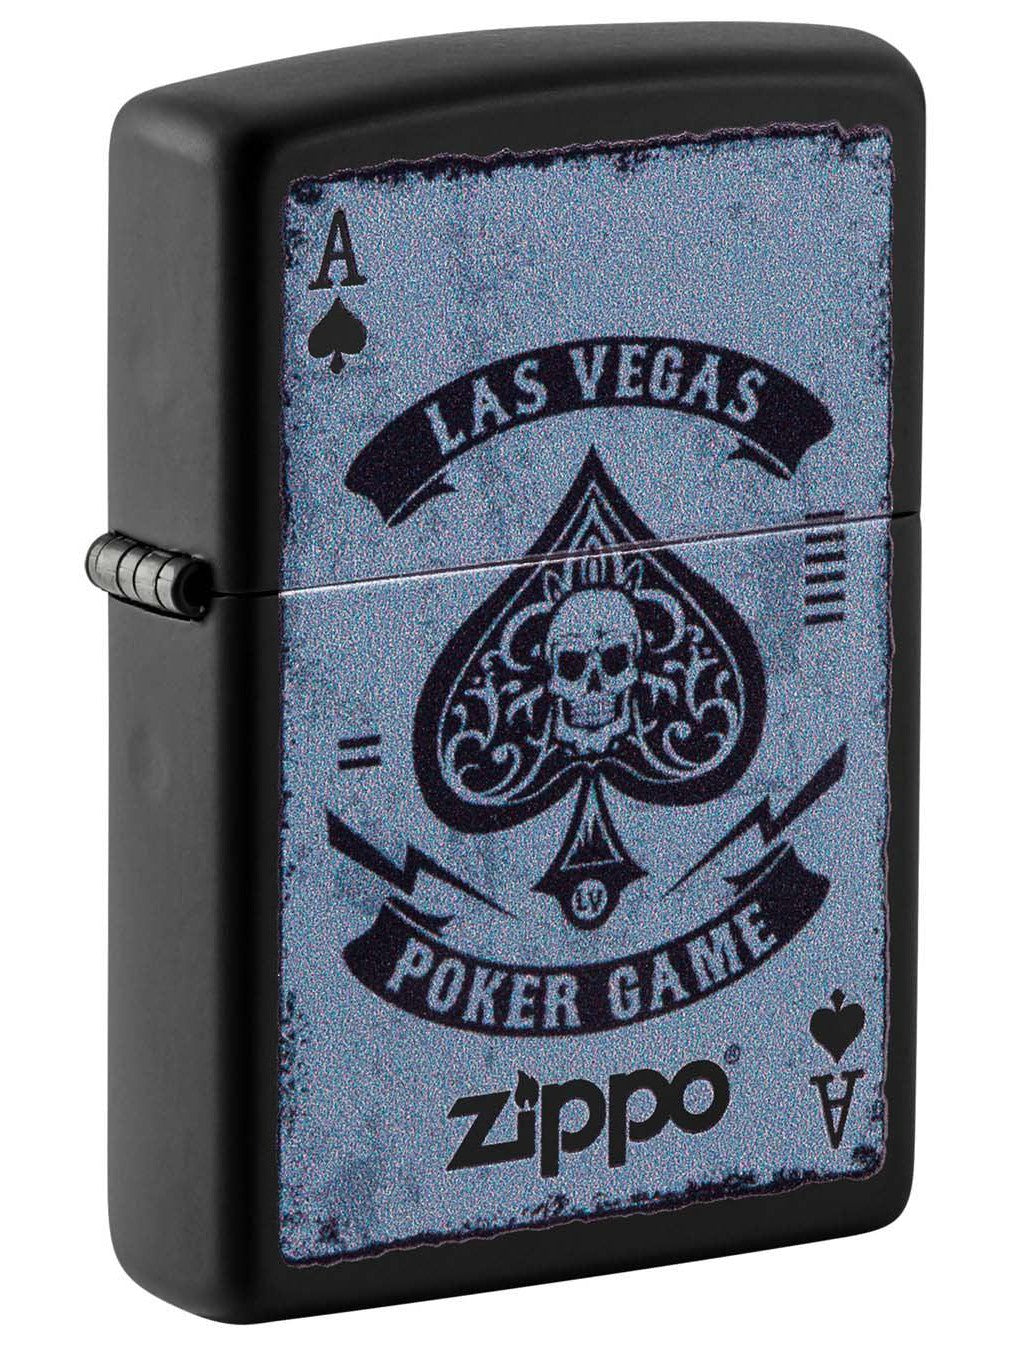 Zippo Lighter: Ace of Spades, Las Vegas Poker Game - Black Matte 49908